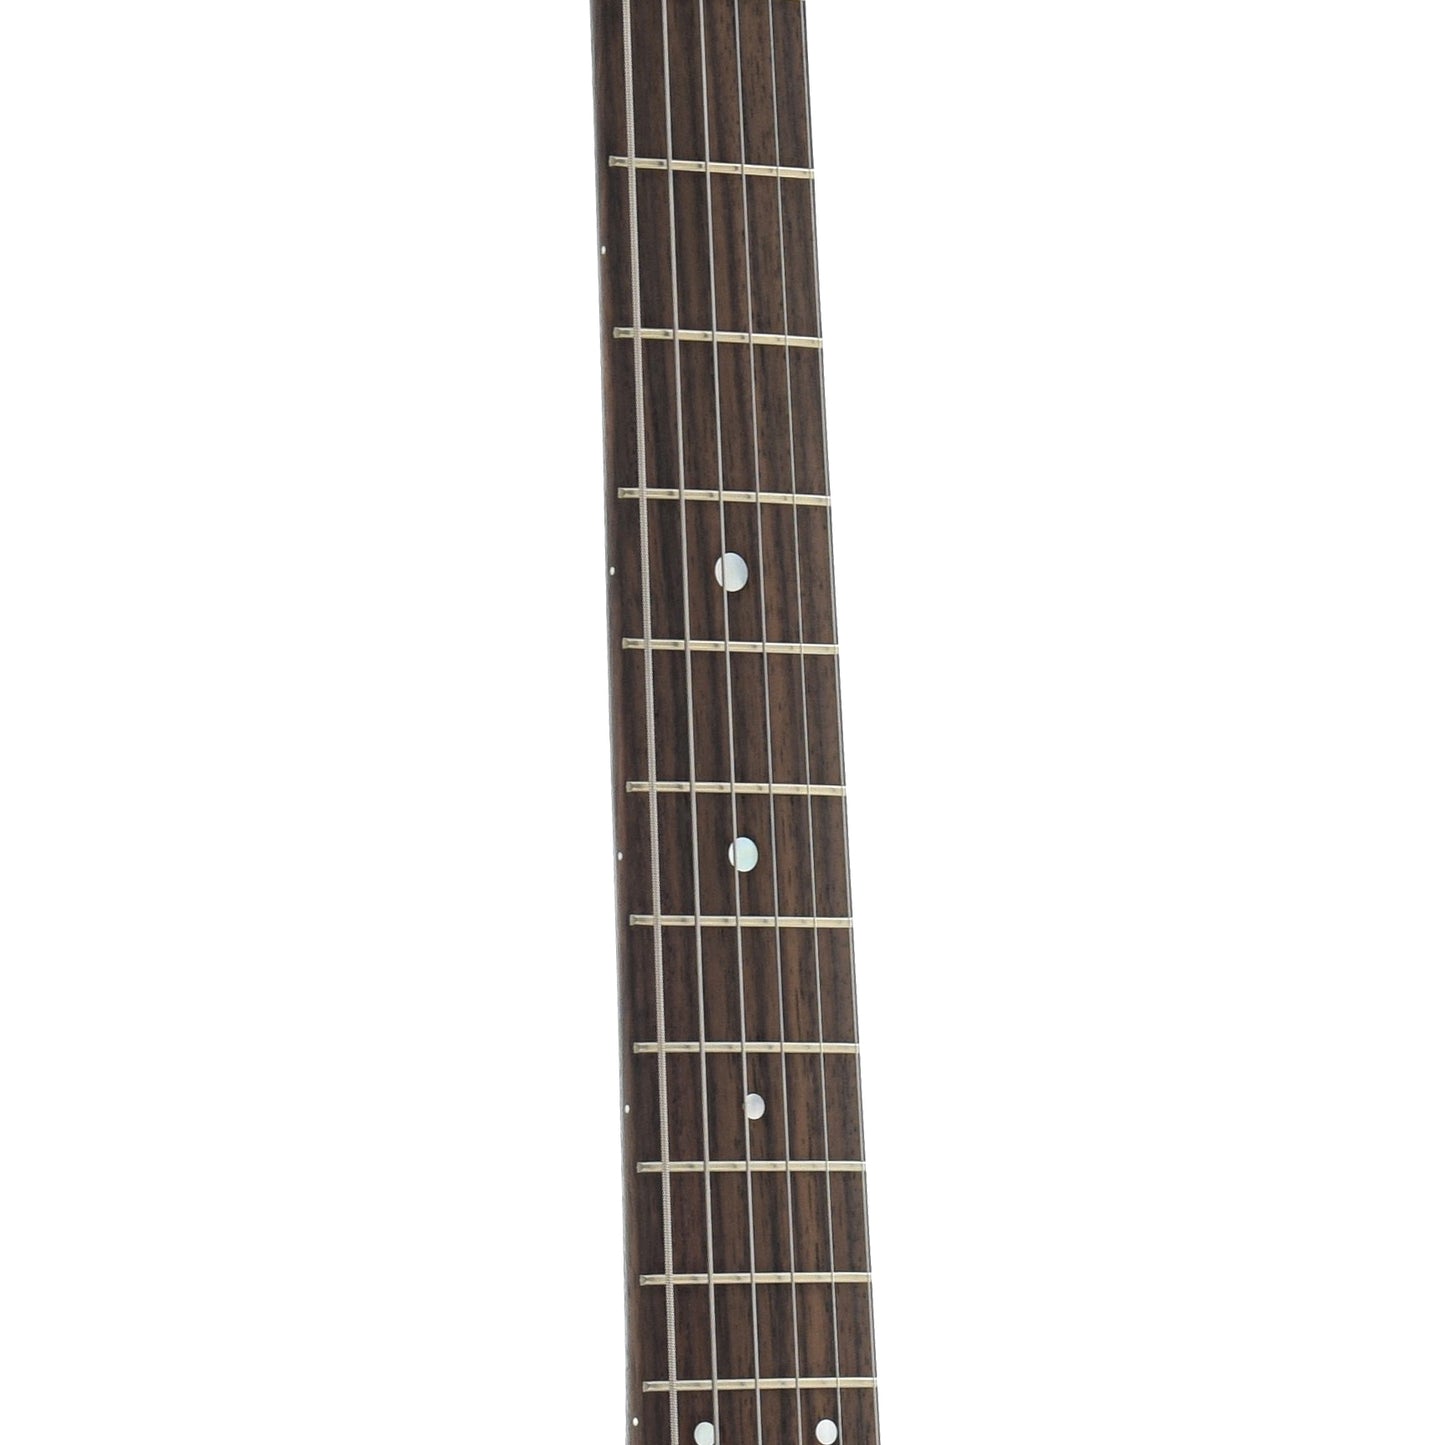 Fretboard of Martin 000-17E Black Smoke Guitar